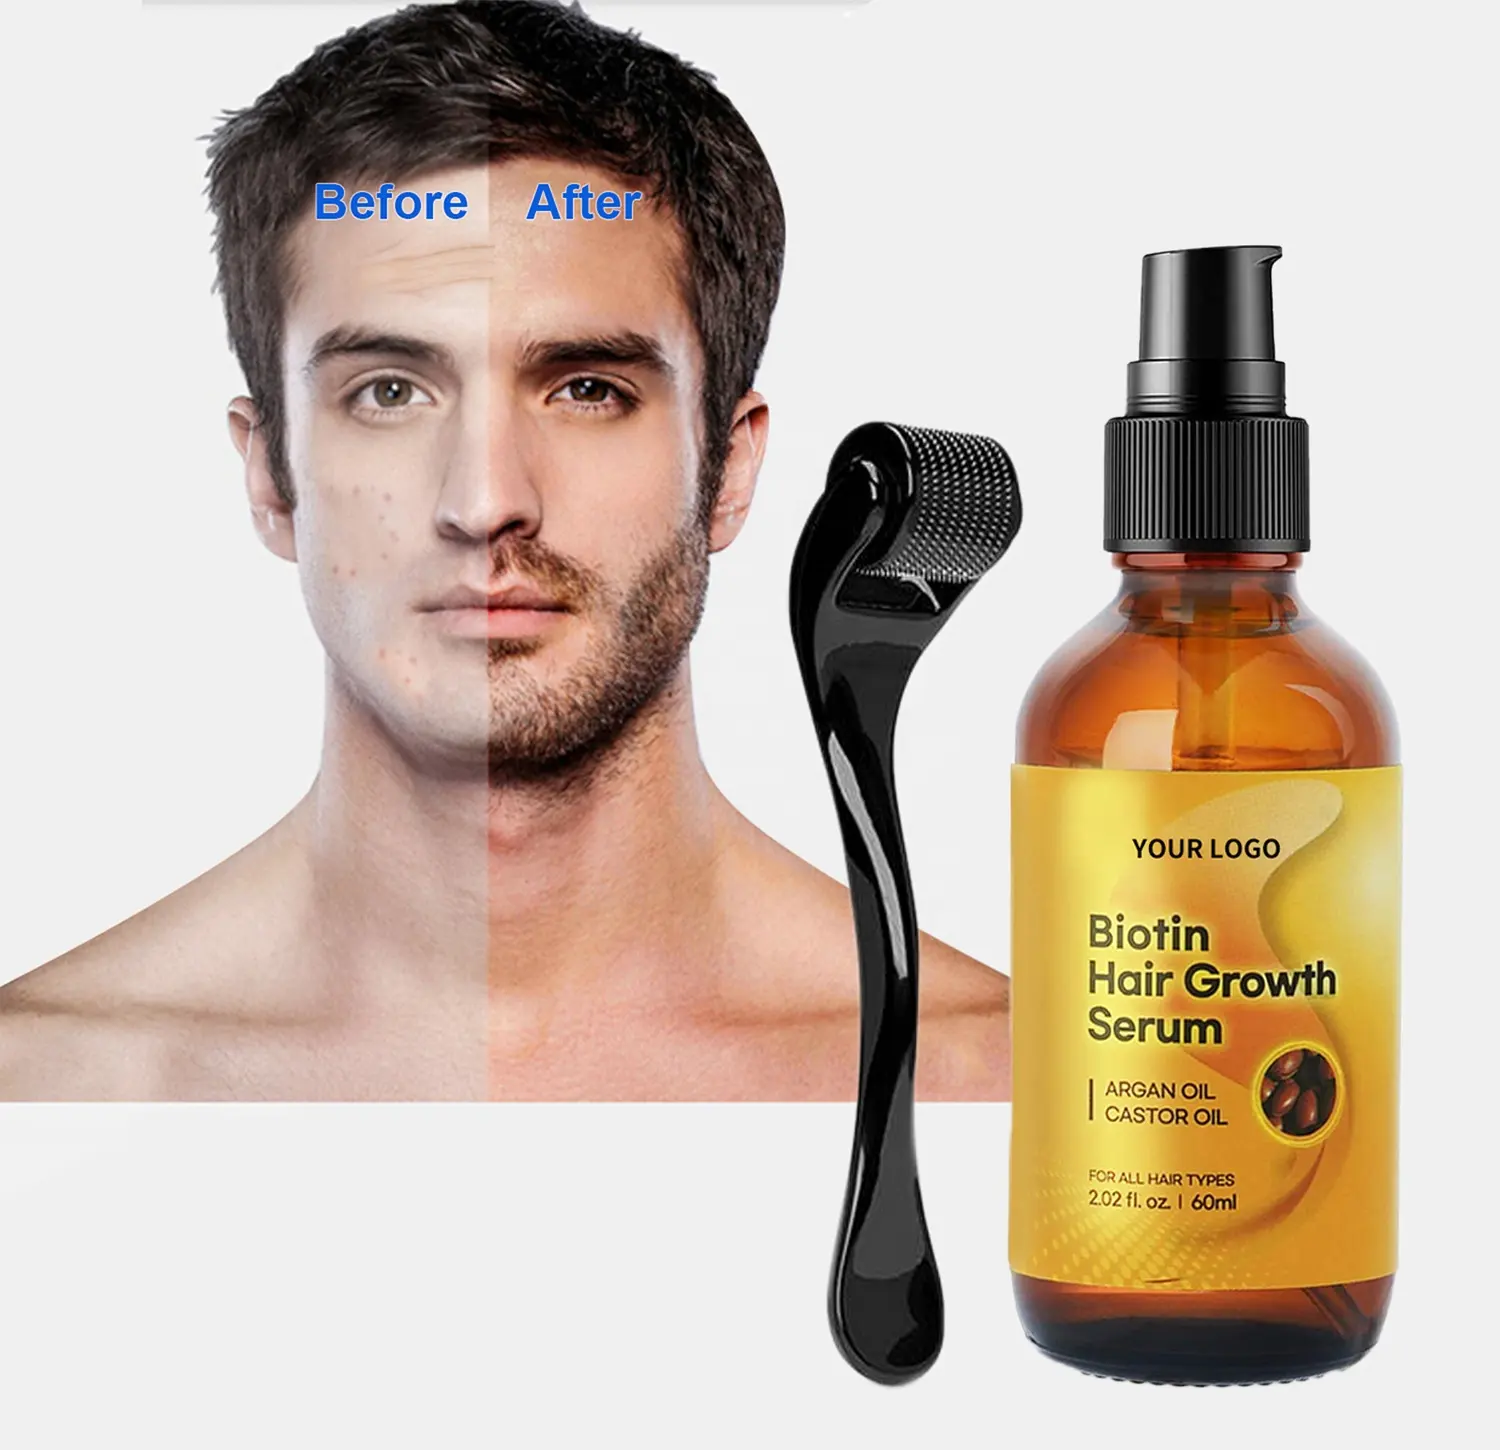 Biotina crescimento do cabelo soro Derma Roller Kit para bigode barba e cabelo rebrota cabelo óleo soro